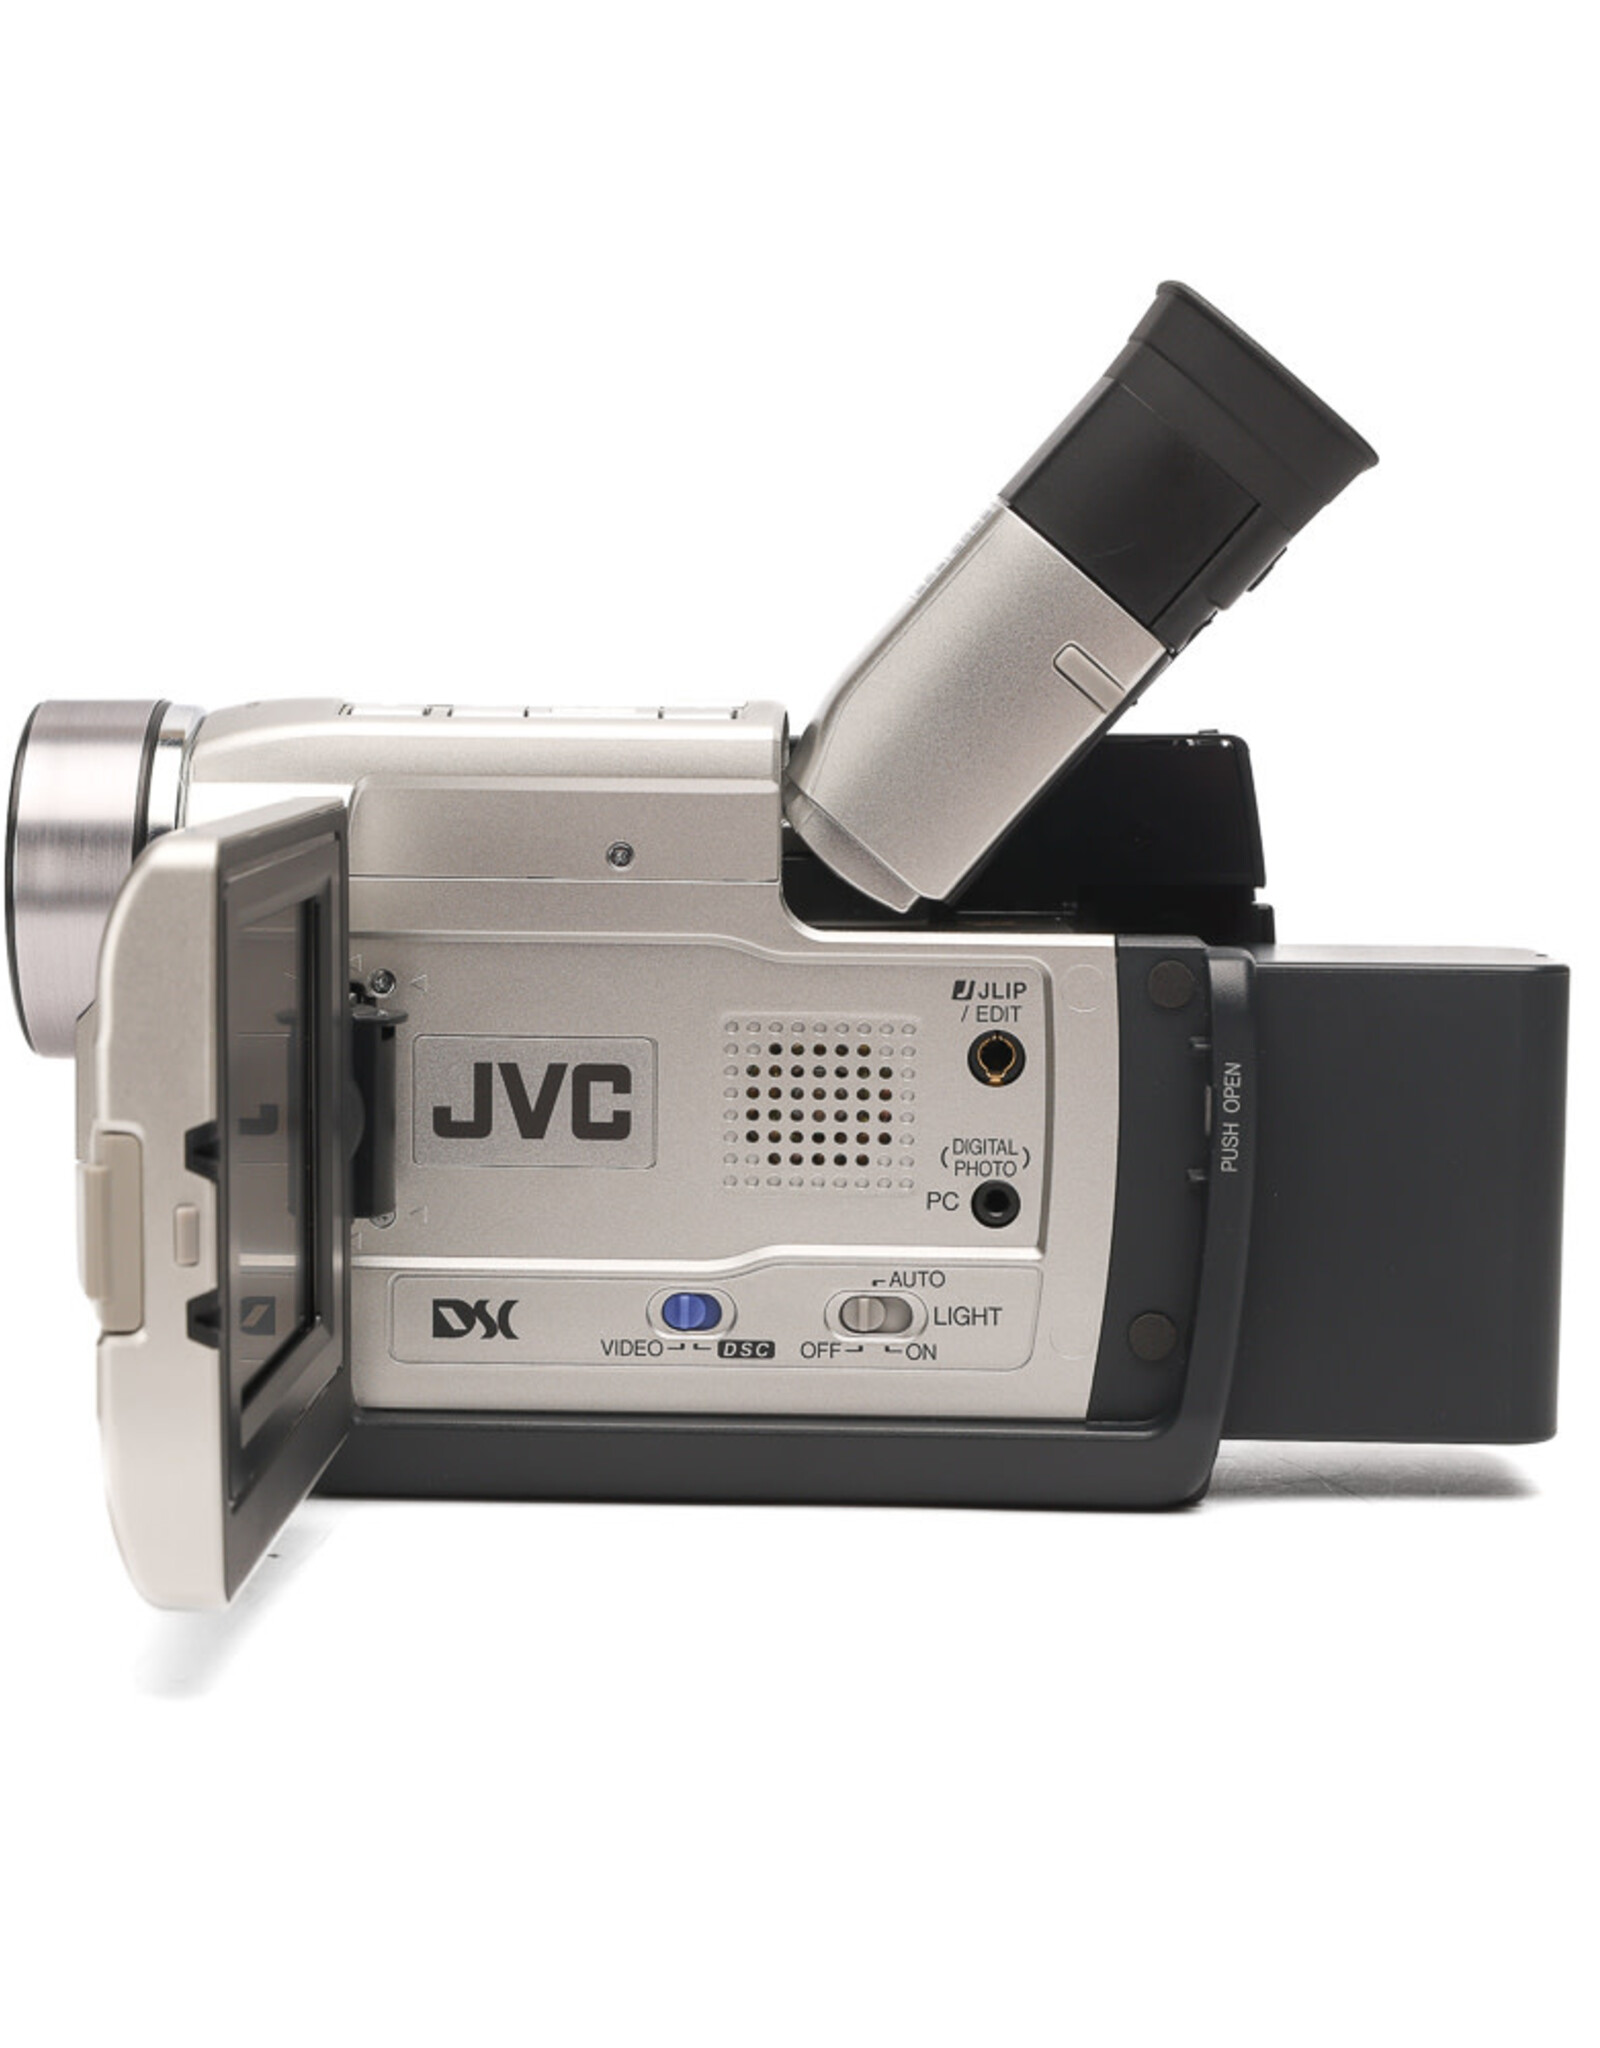 JVC JVC GR-DVL505U Mini DV Camcorder